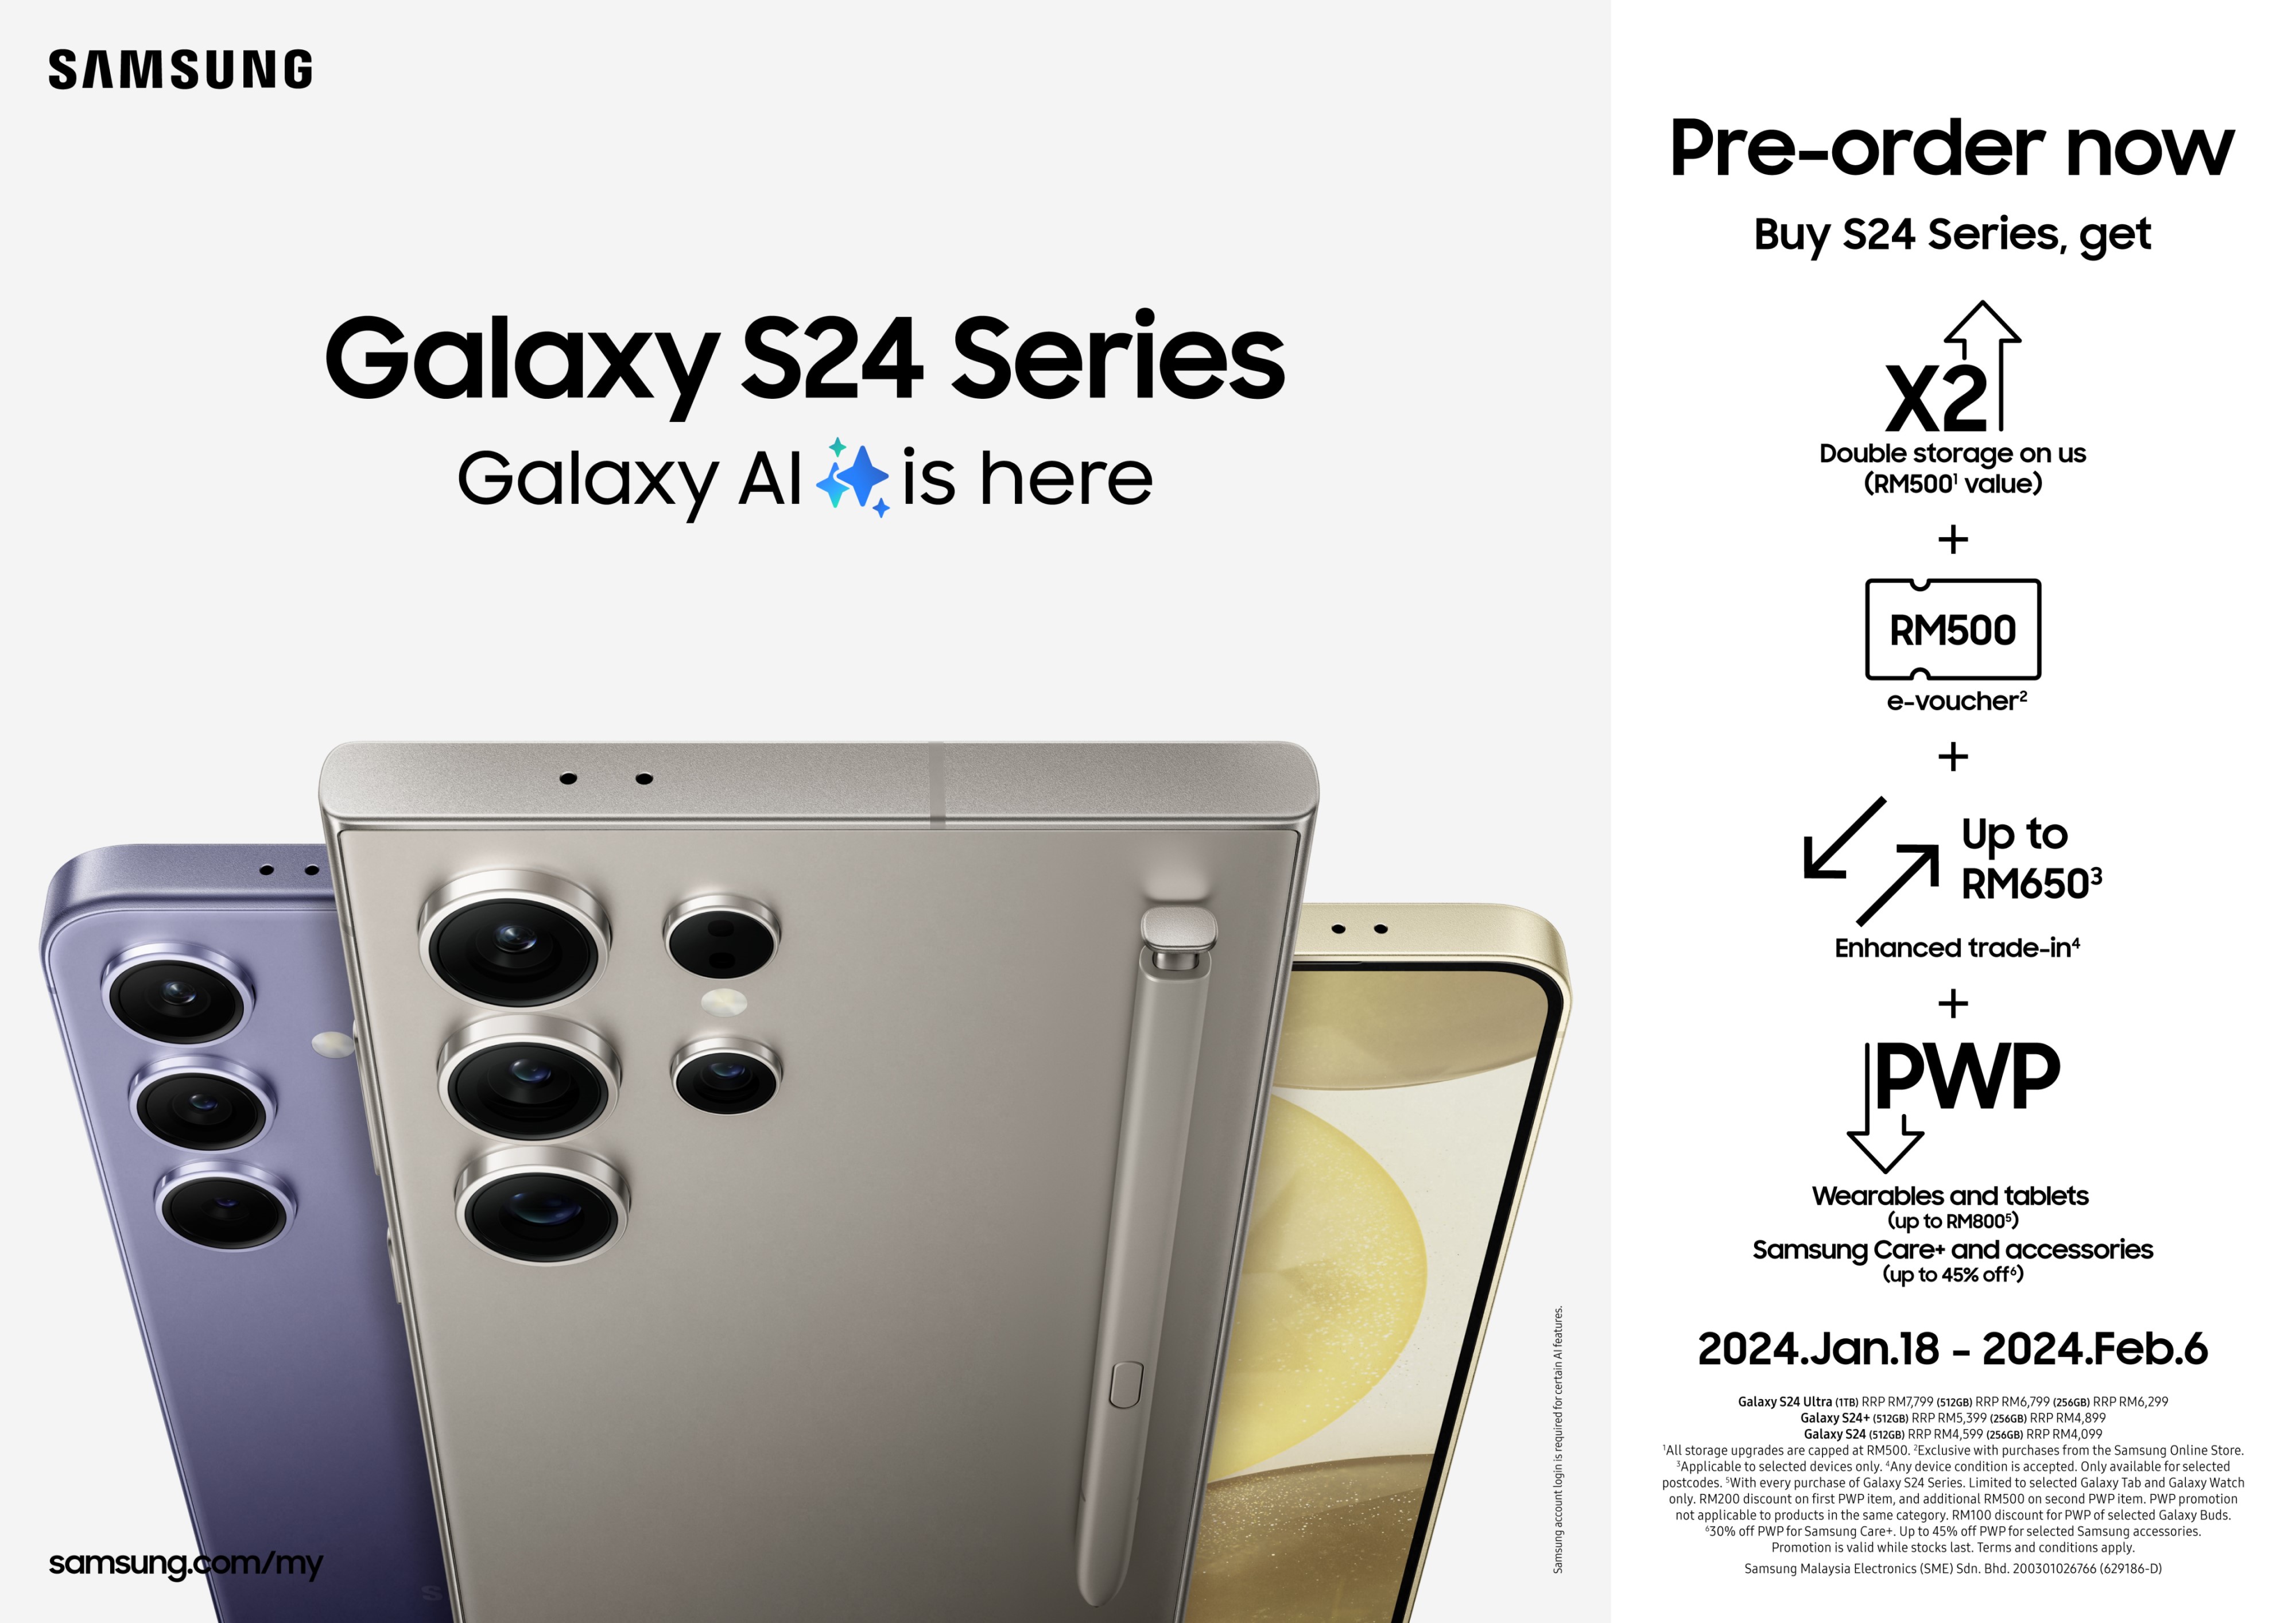 Samsung Galaxy S24 Series Pre-Order Promo